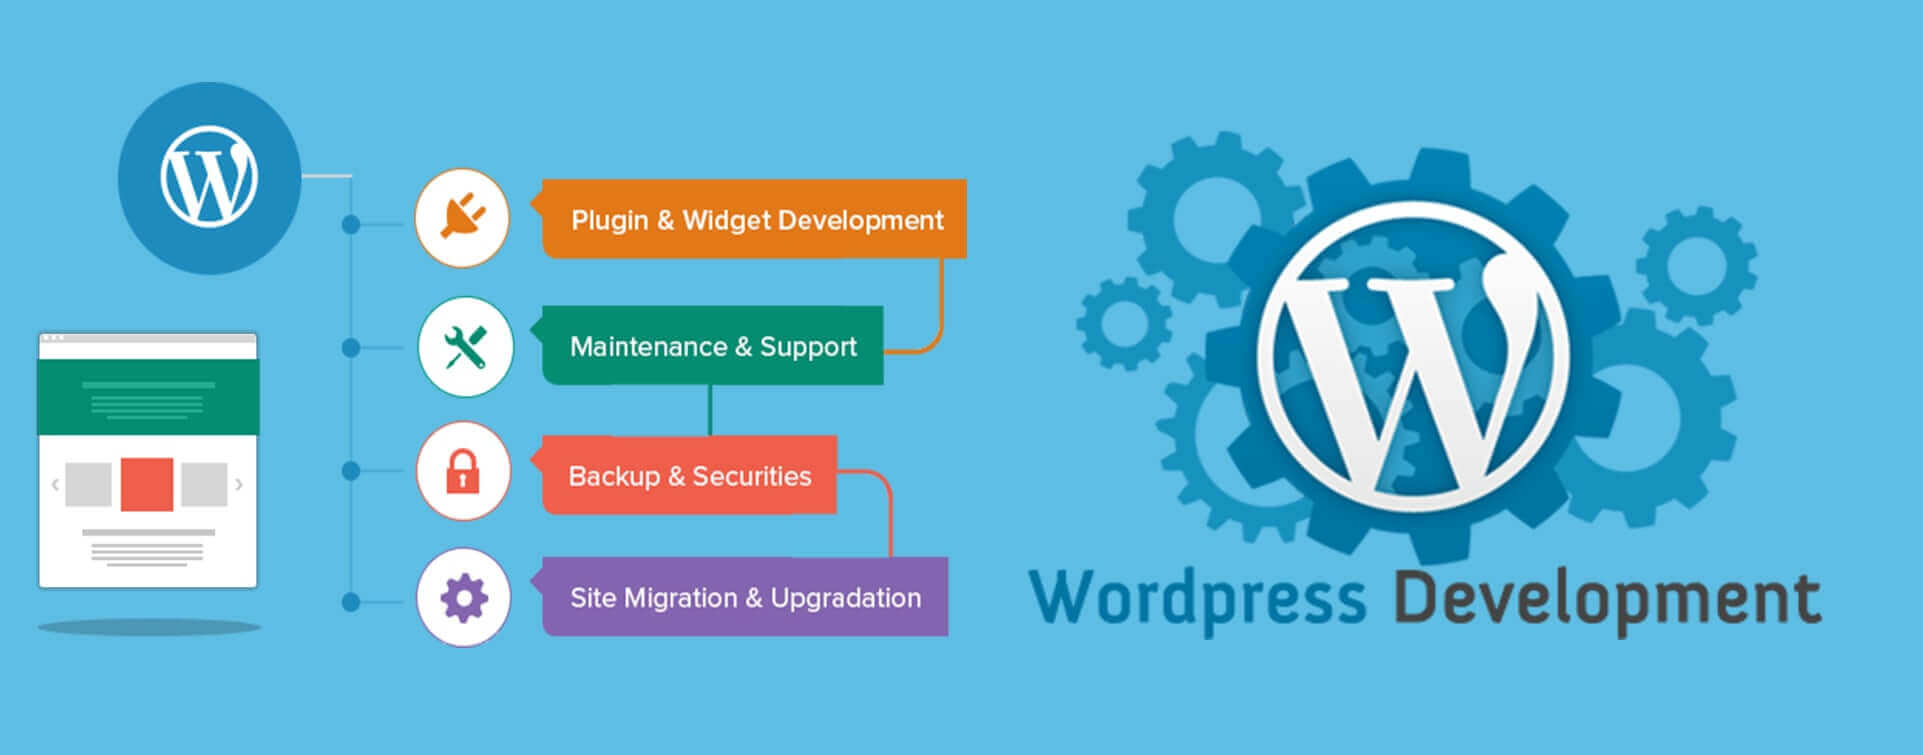 wordpress-development